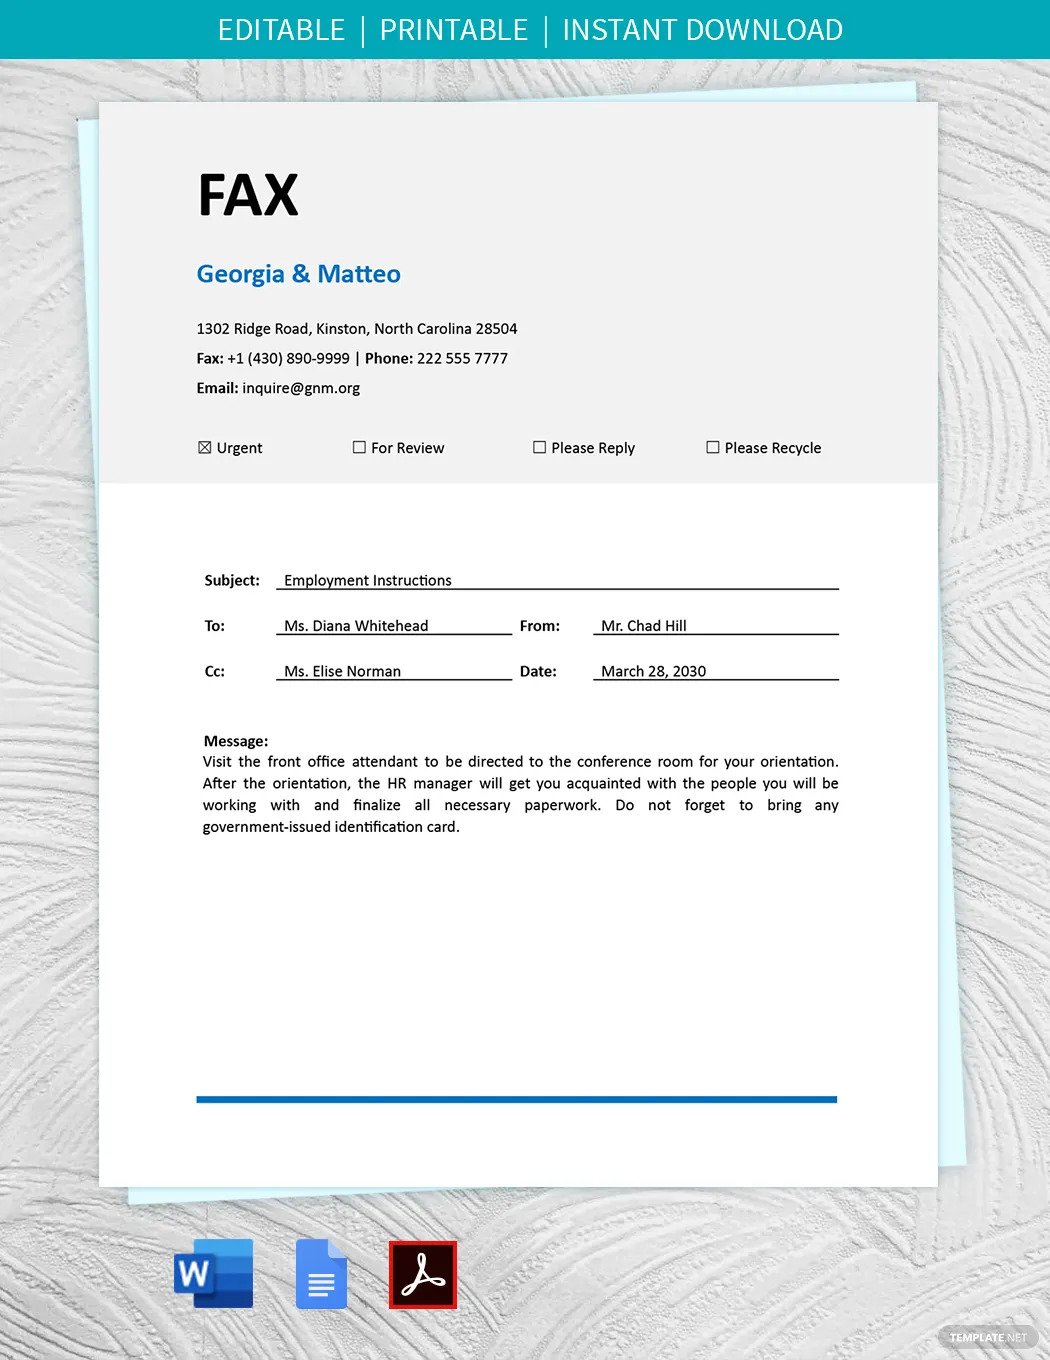 job-fax-cover-sheet